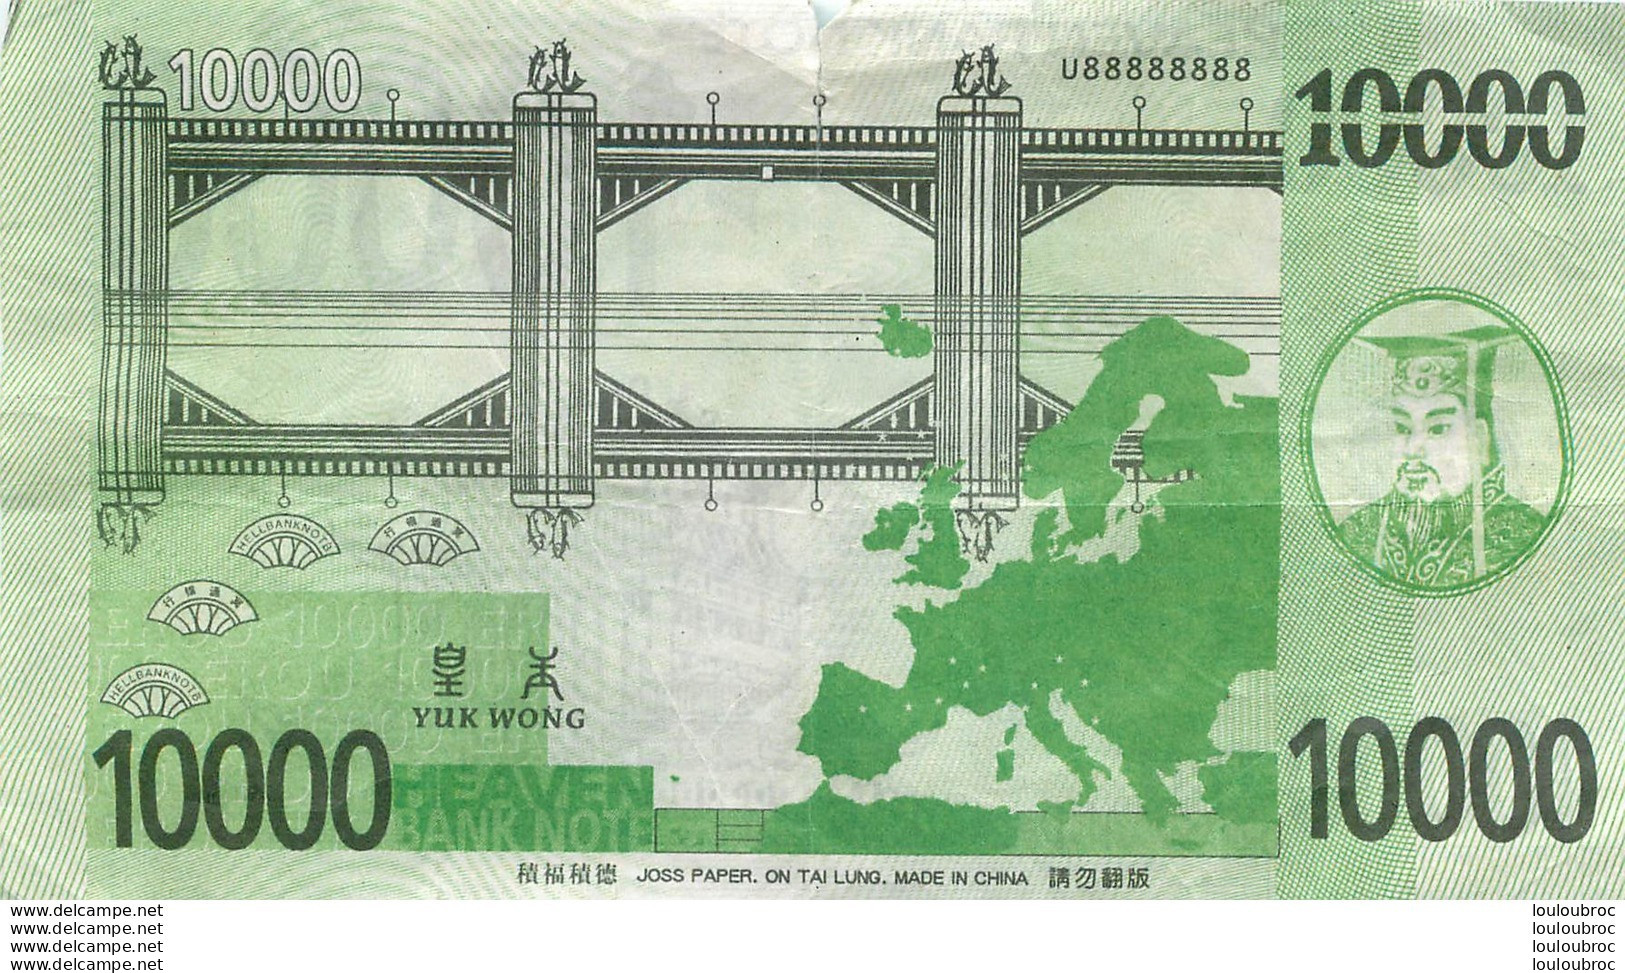 BILLET  10000 YUK WONG  HEAVEN BANK NOTE - China